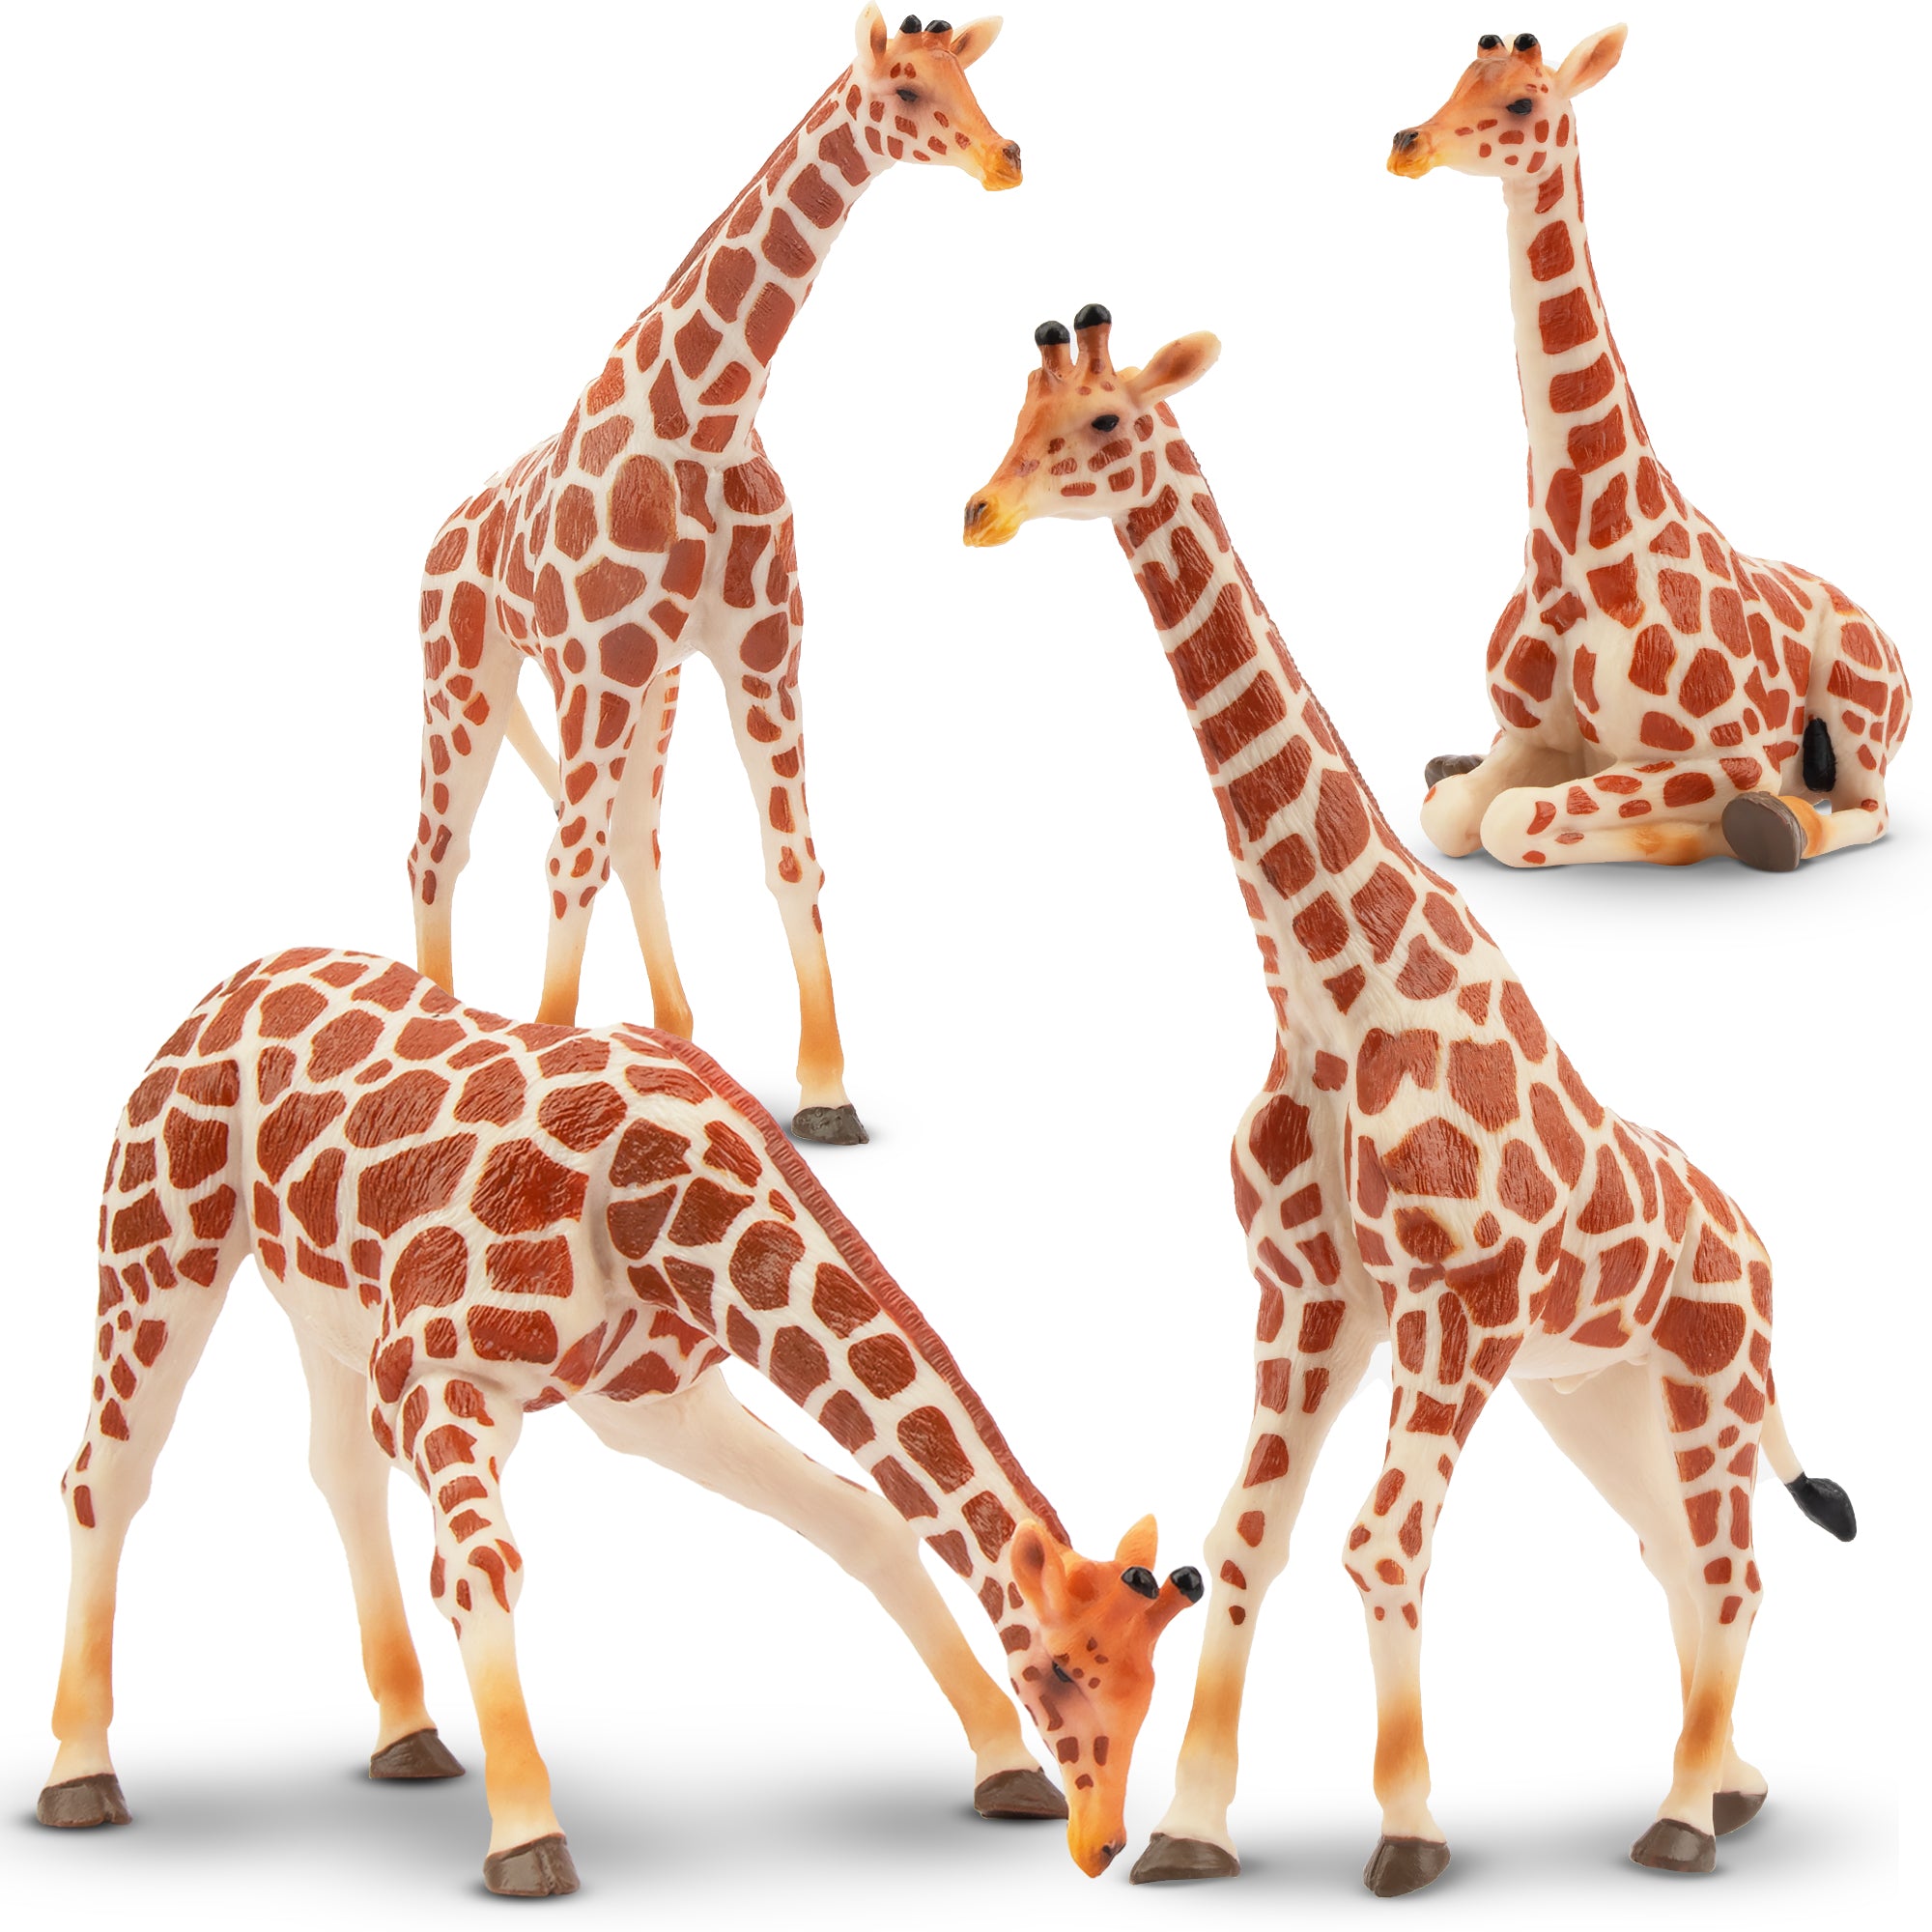 4-Piece Giraffe Family Figurines Playset with Adult & Baby Giraffes